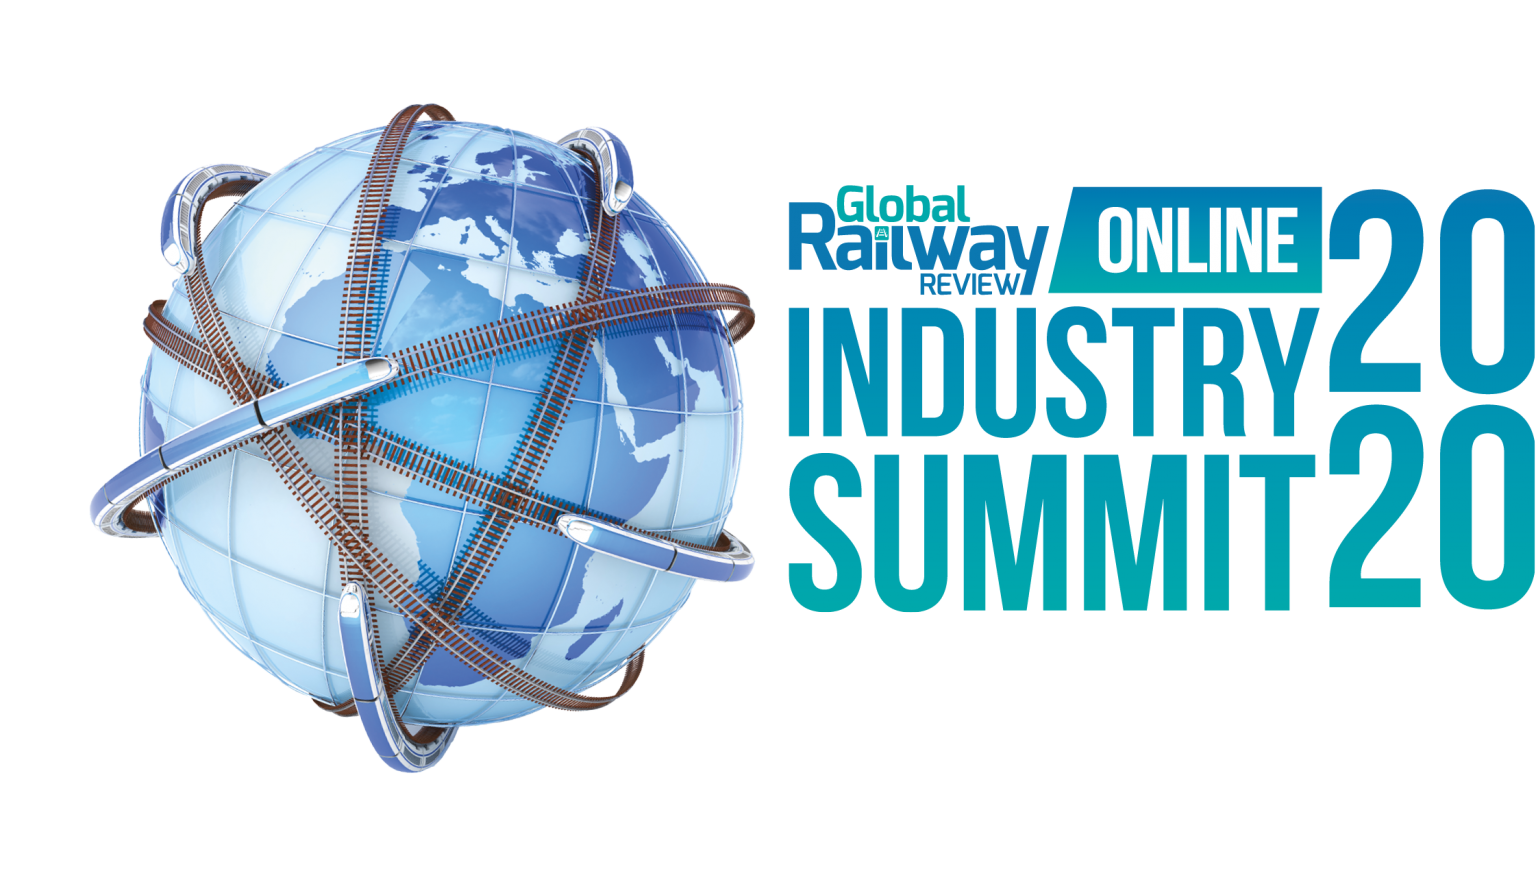 Global Railway Review Online Industry Summit 2020